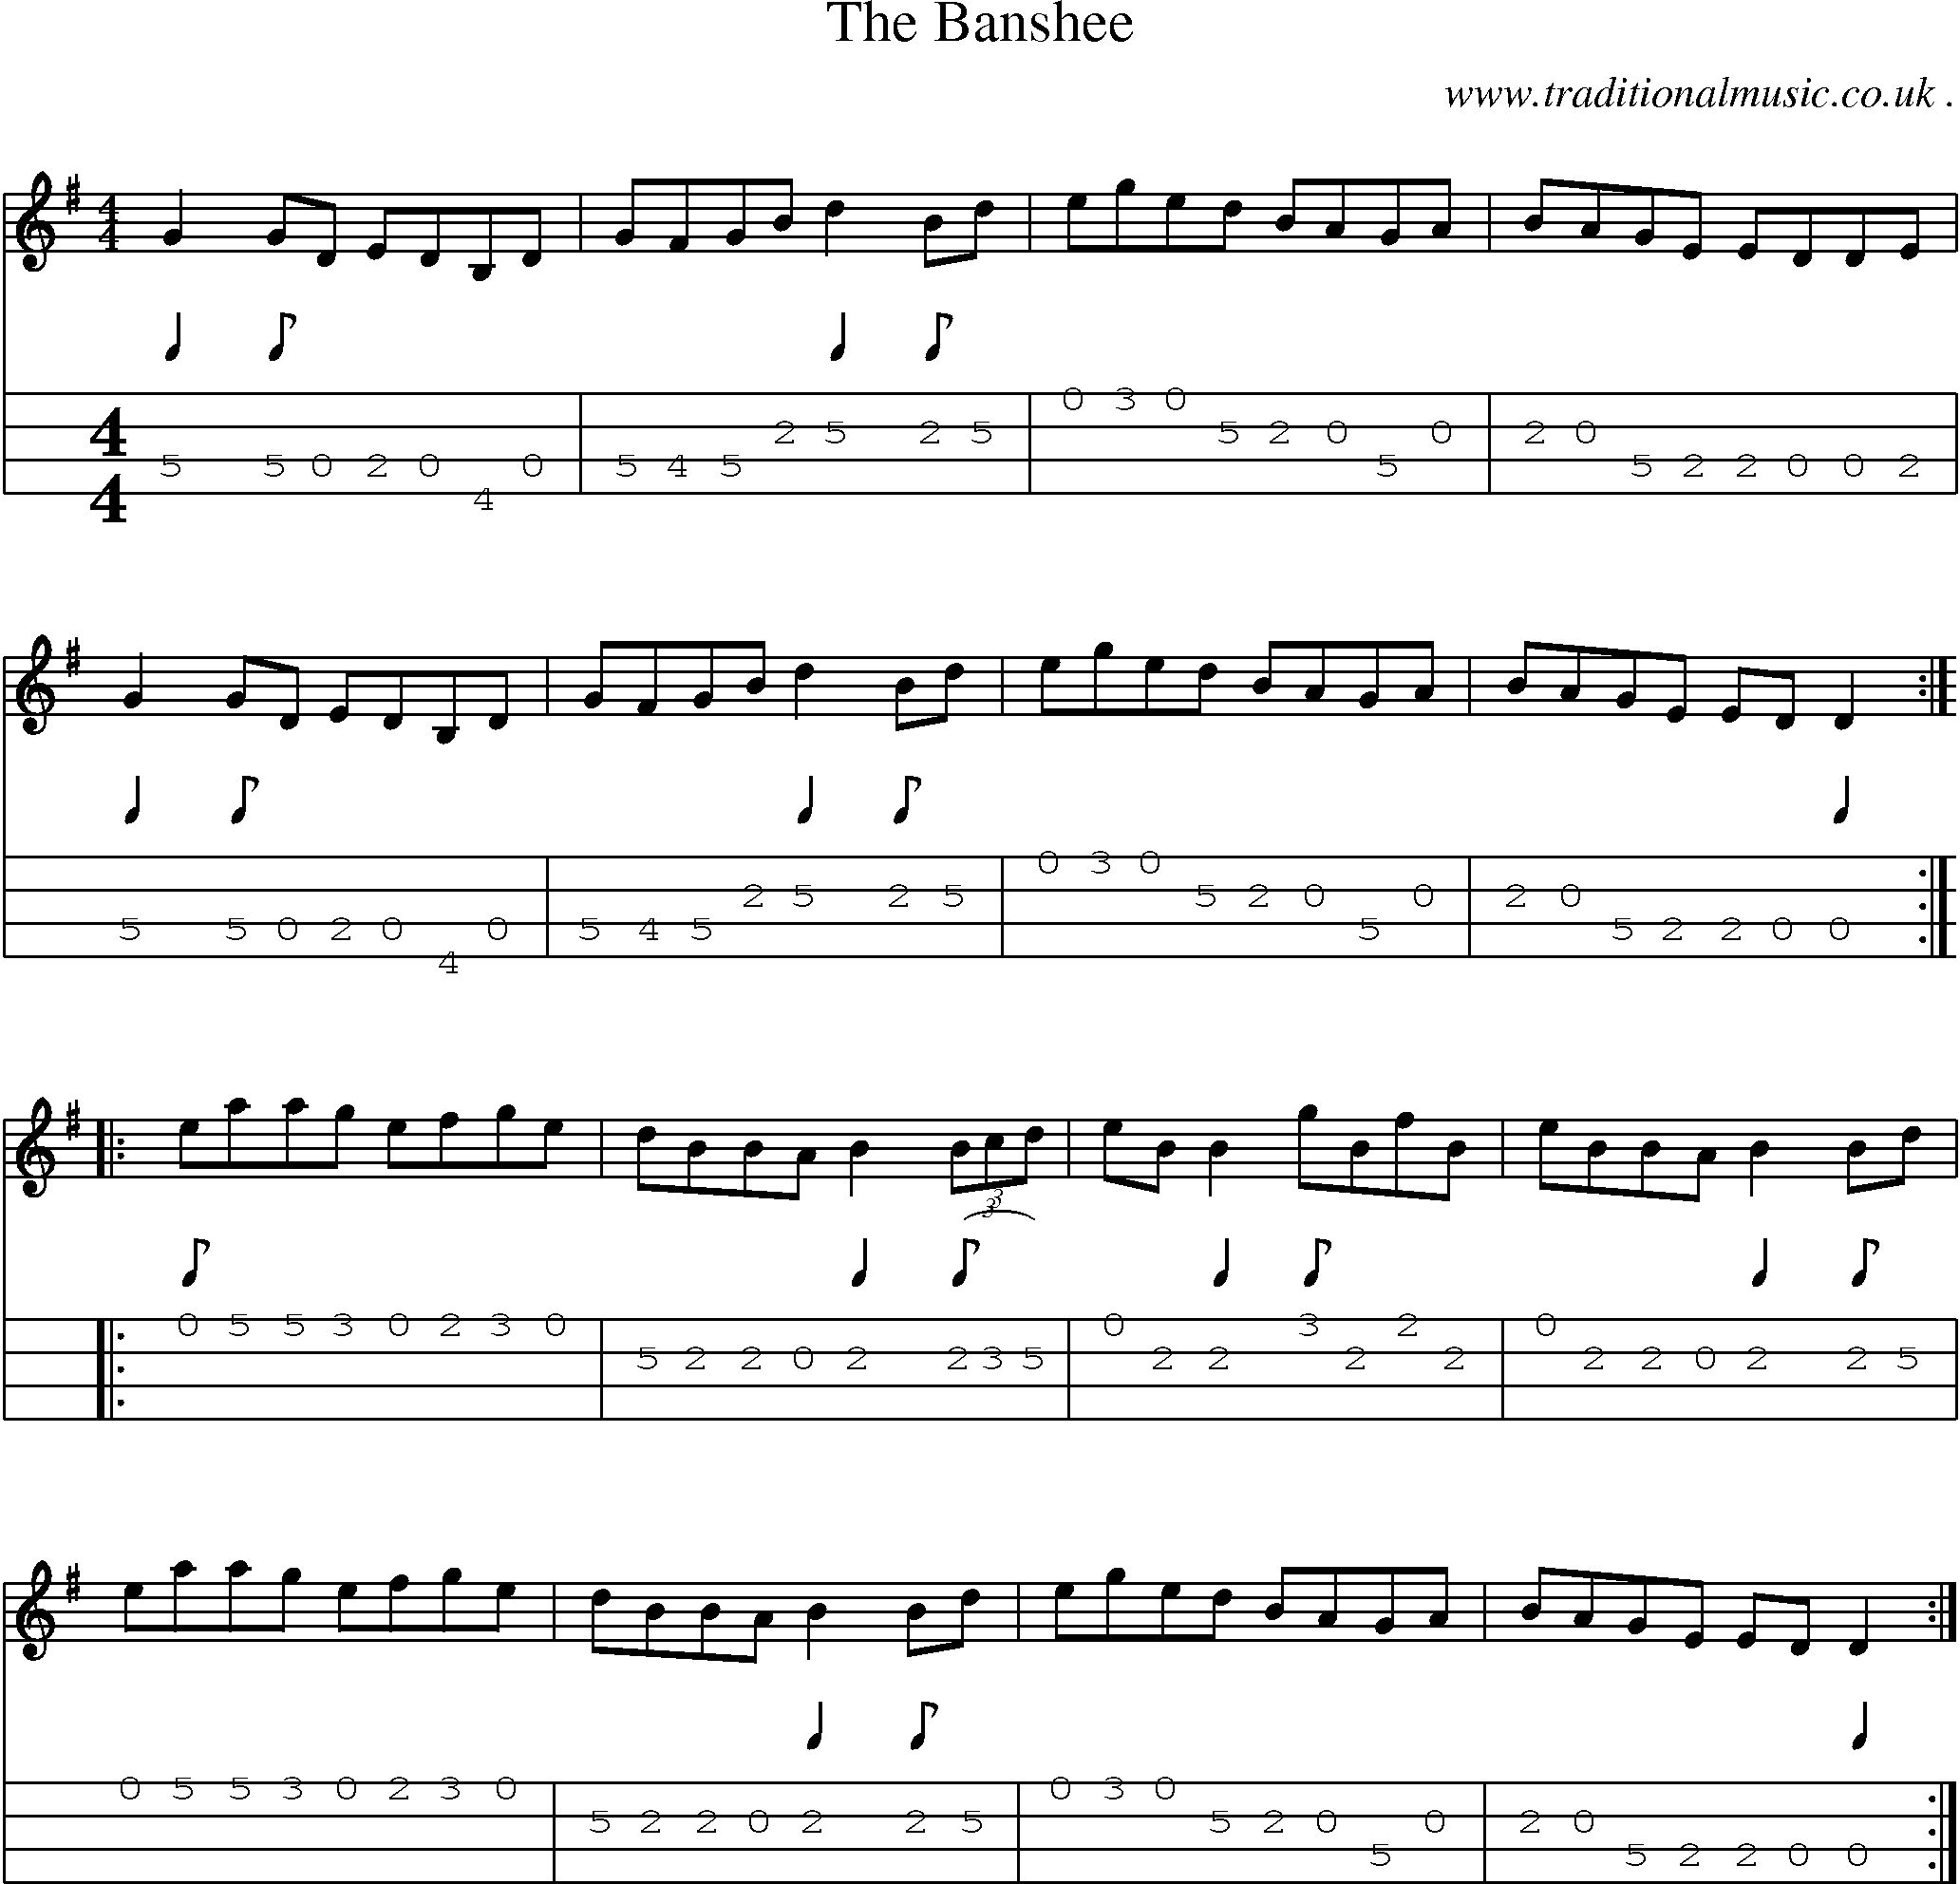 Sheet-Music and Mandolin Tabs for The Banshee